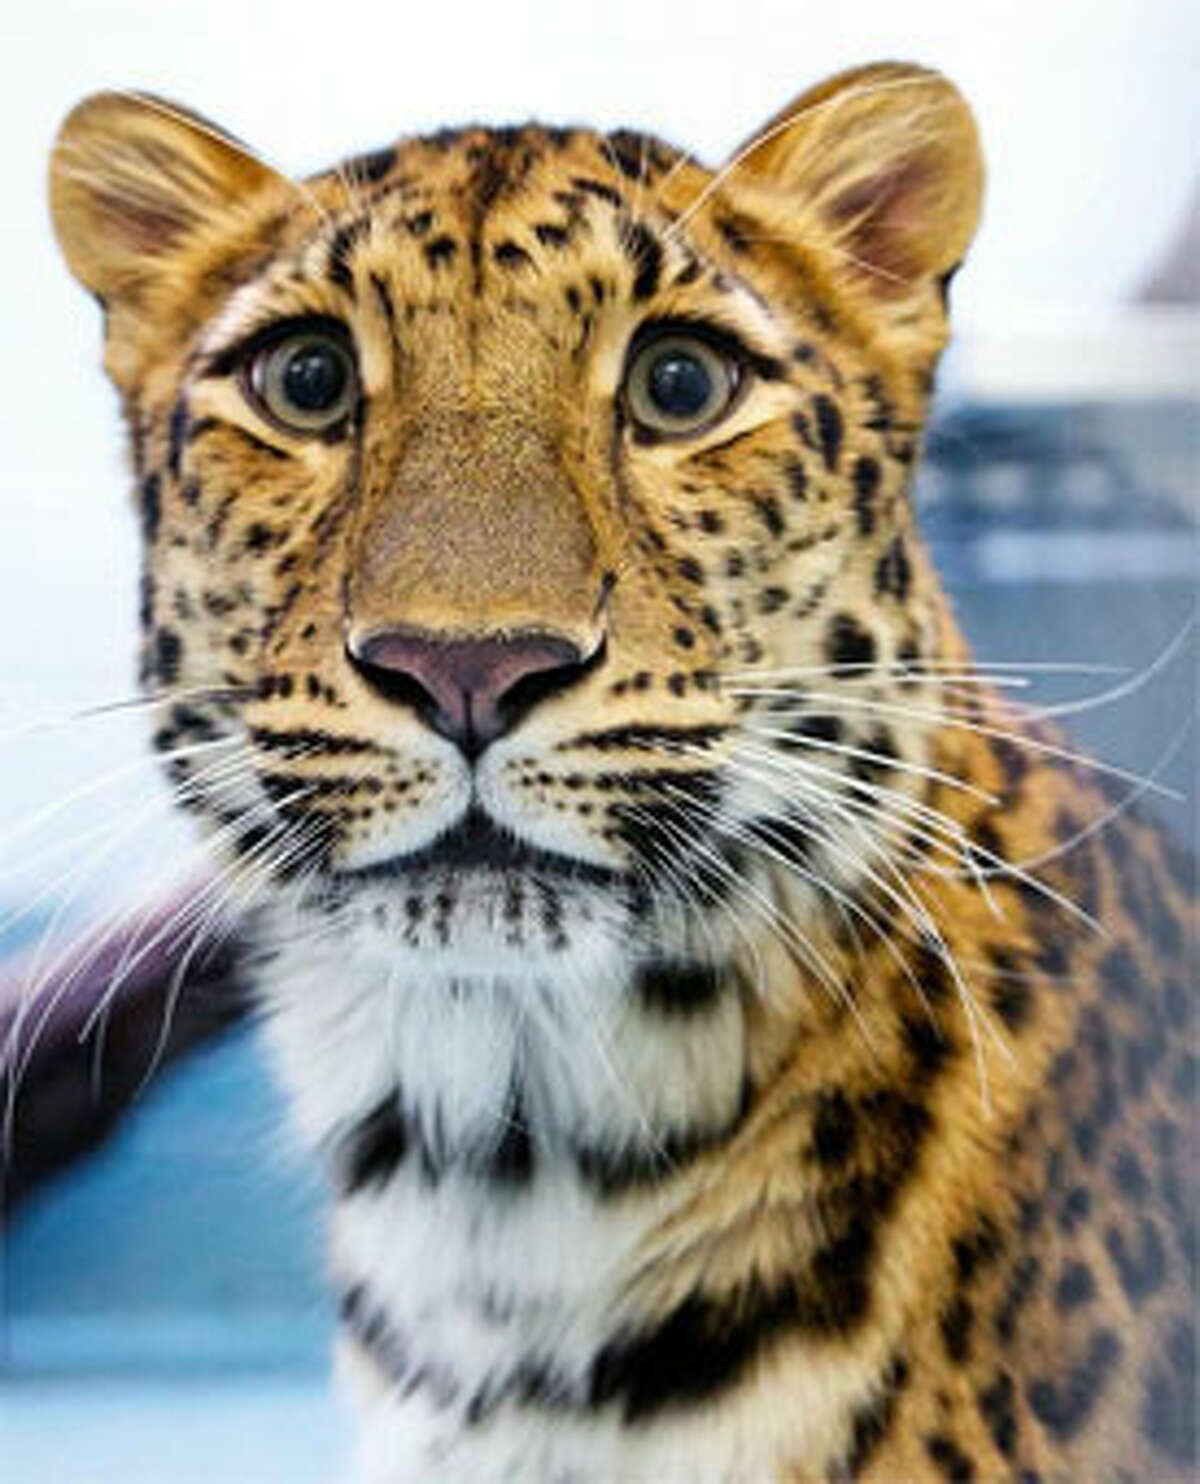 Sofiya, a rare Amur leopard now at Connecticut’s Beardsley Zoo in Bridgeport. (Photo by Shannon Calvert)